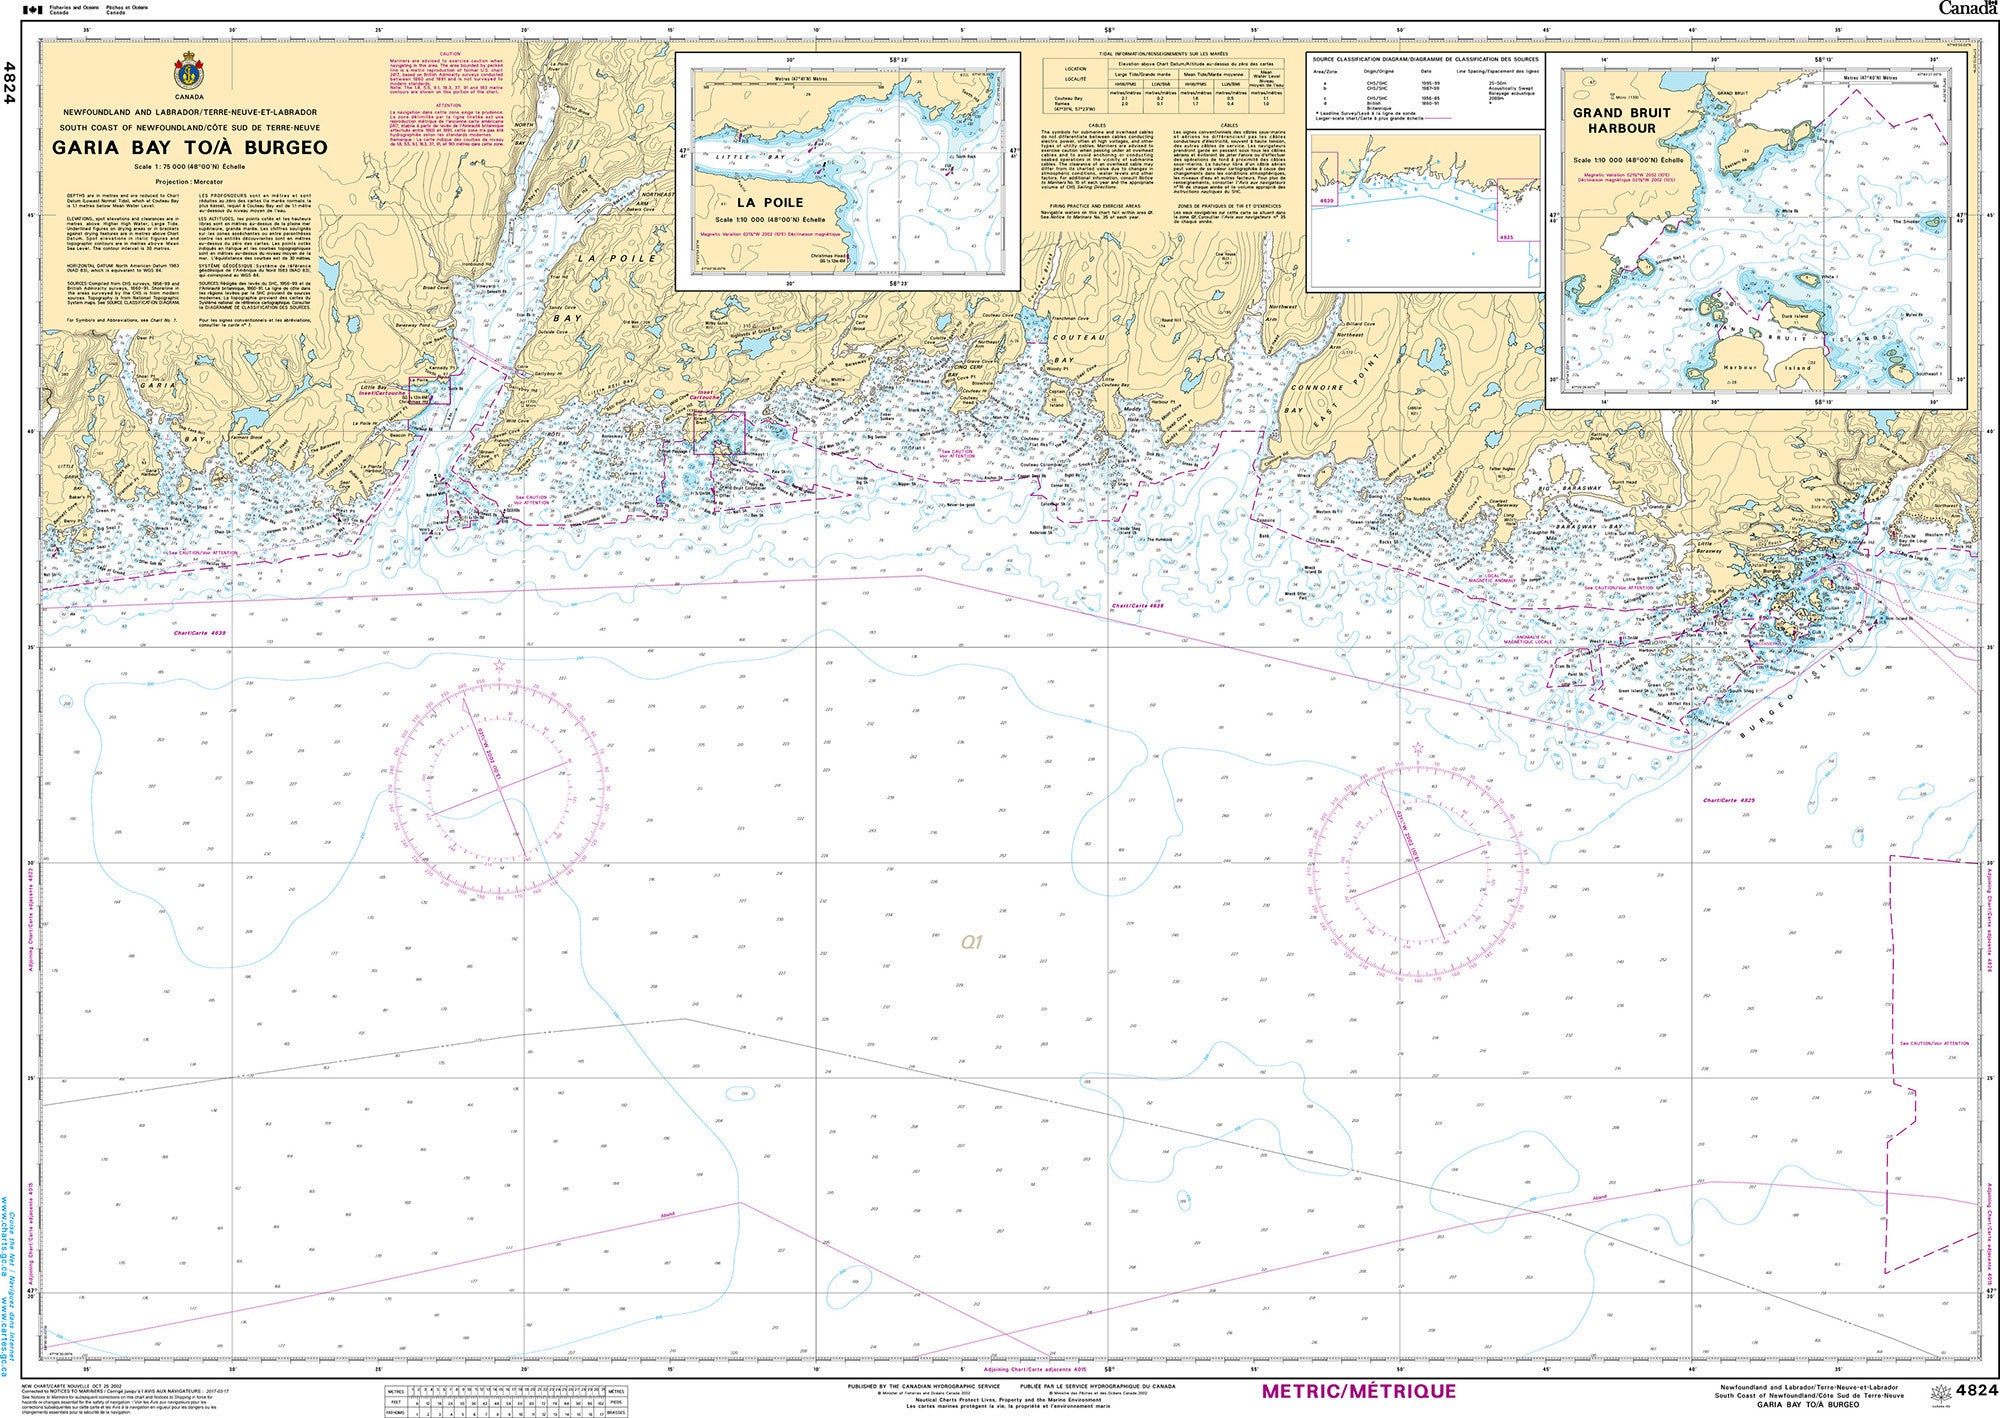 Canadian Hydrographic Service Nautical Chart CHS4824: Garia Bay to/à Burgeo